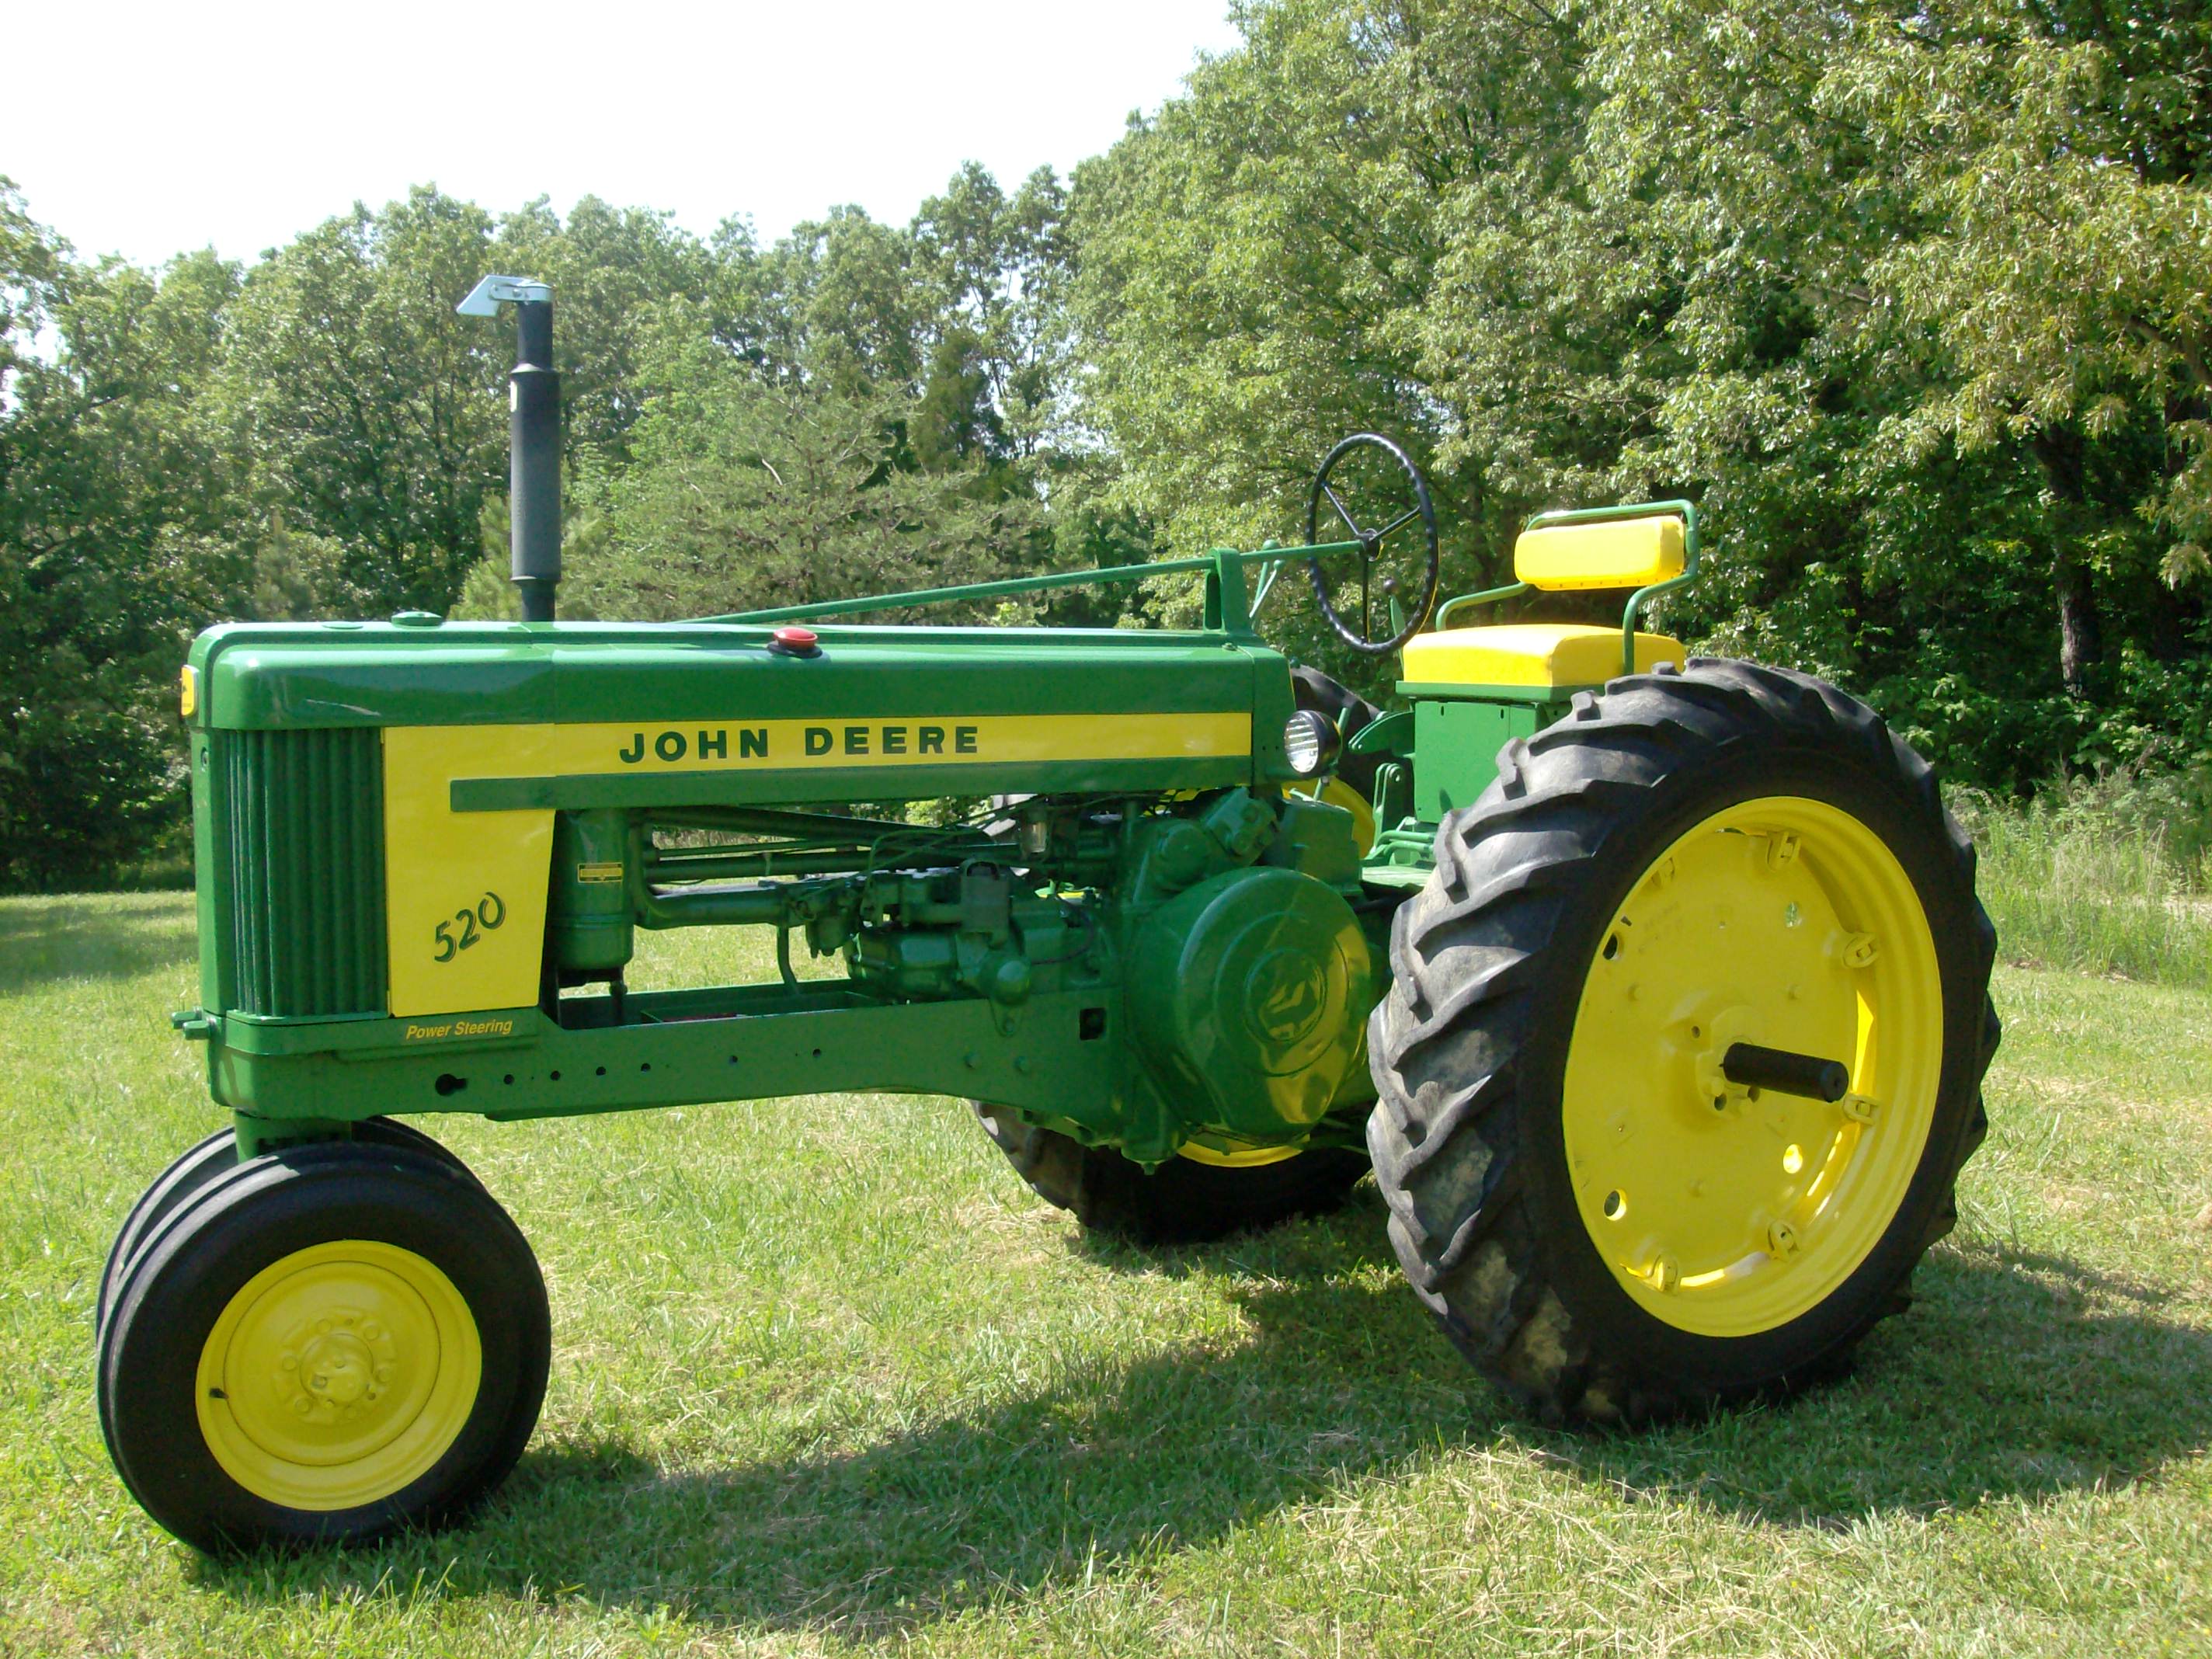 John Deere 520 Farm Tractor | John Deere Farm Tractors: John Deere Farm ...